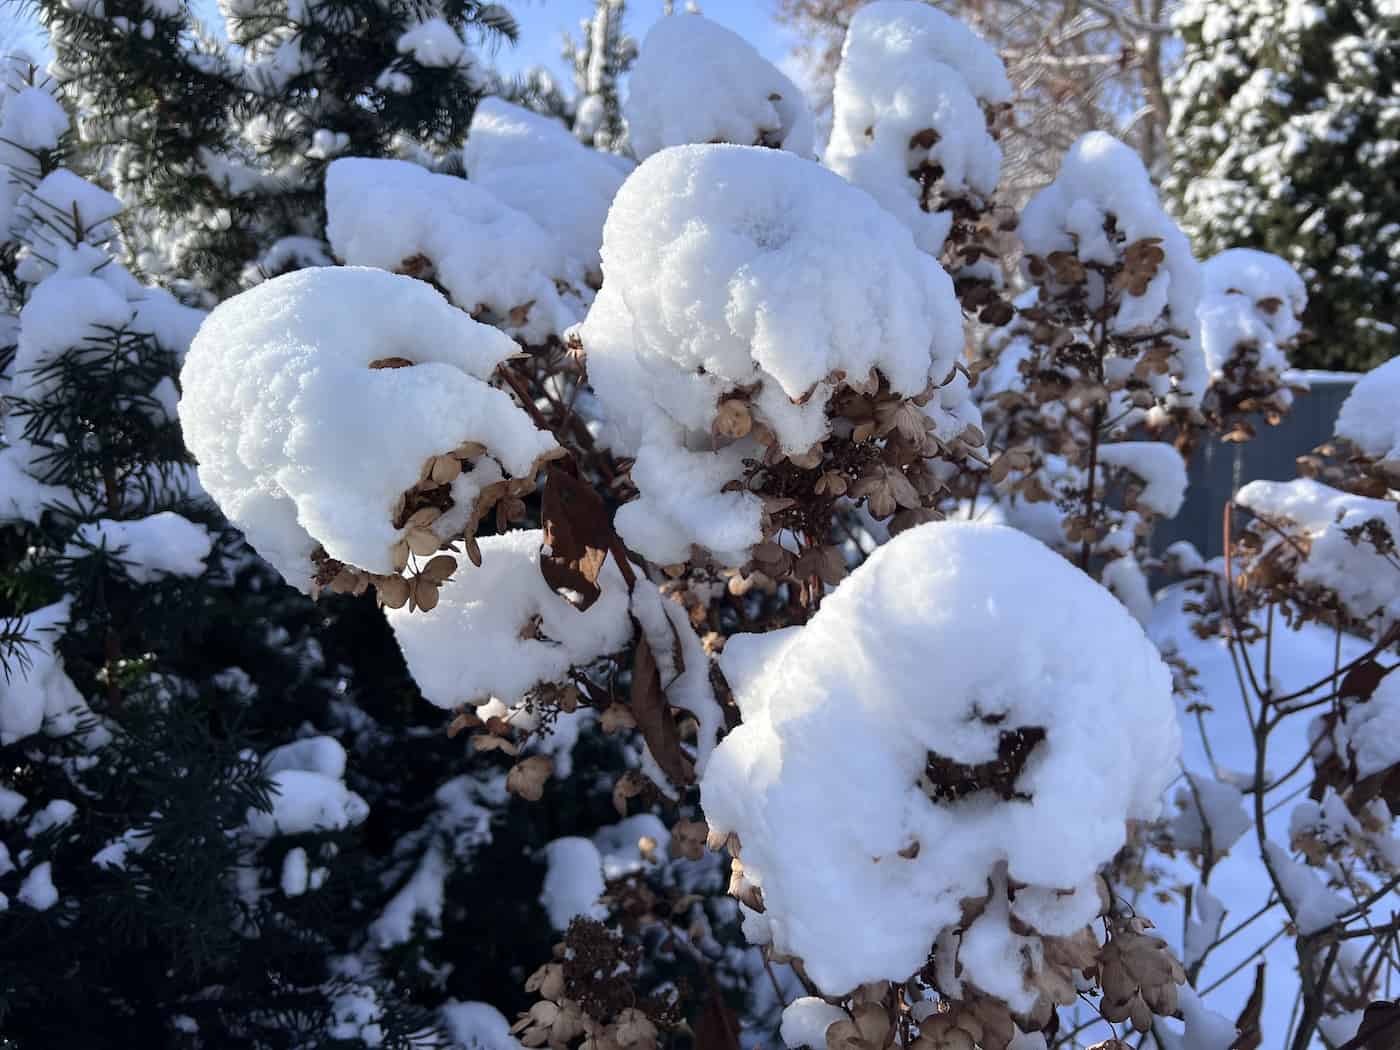 Snow on hydrangea tree branches